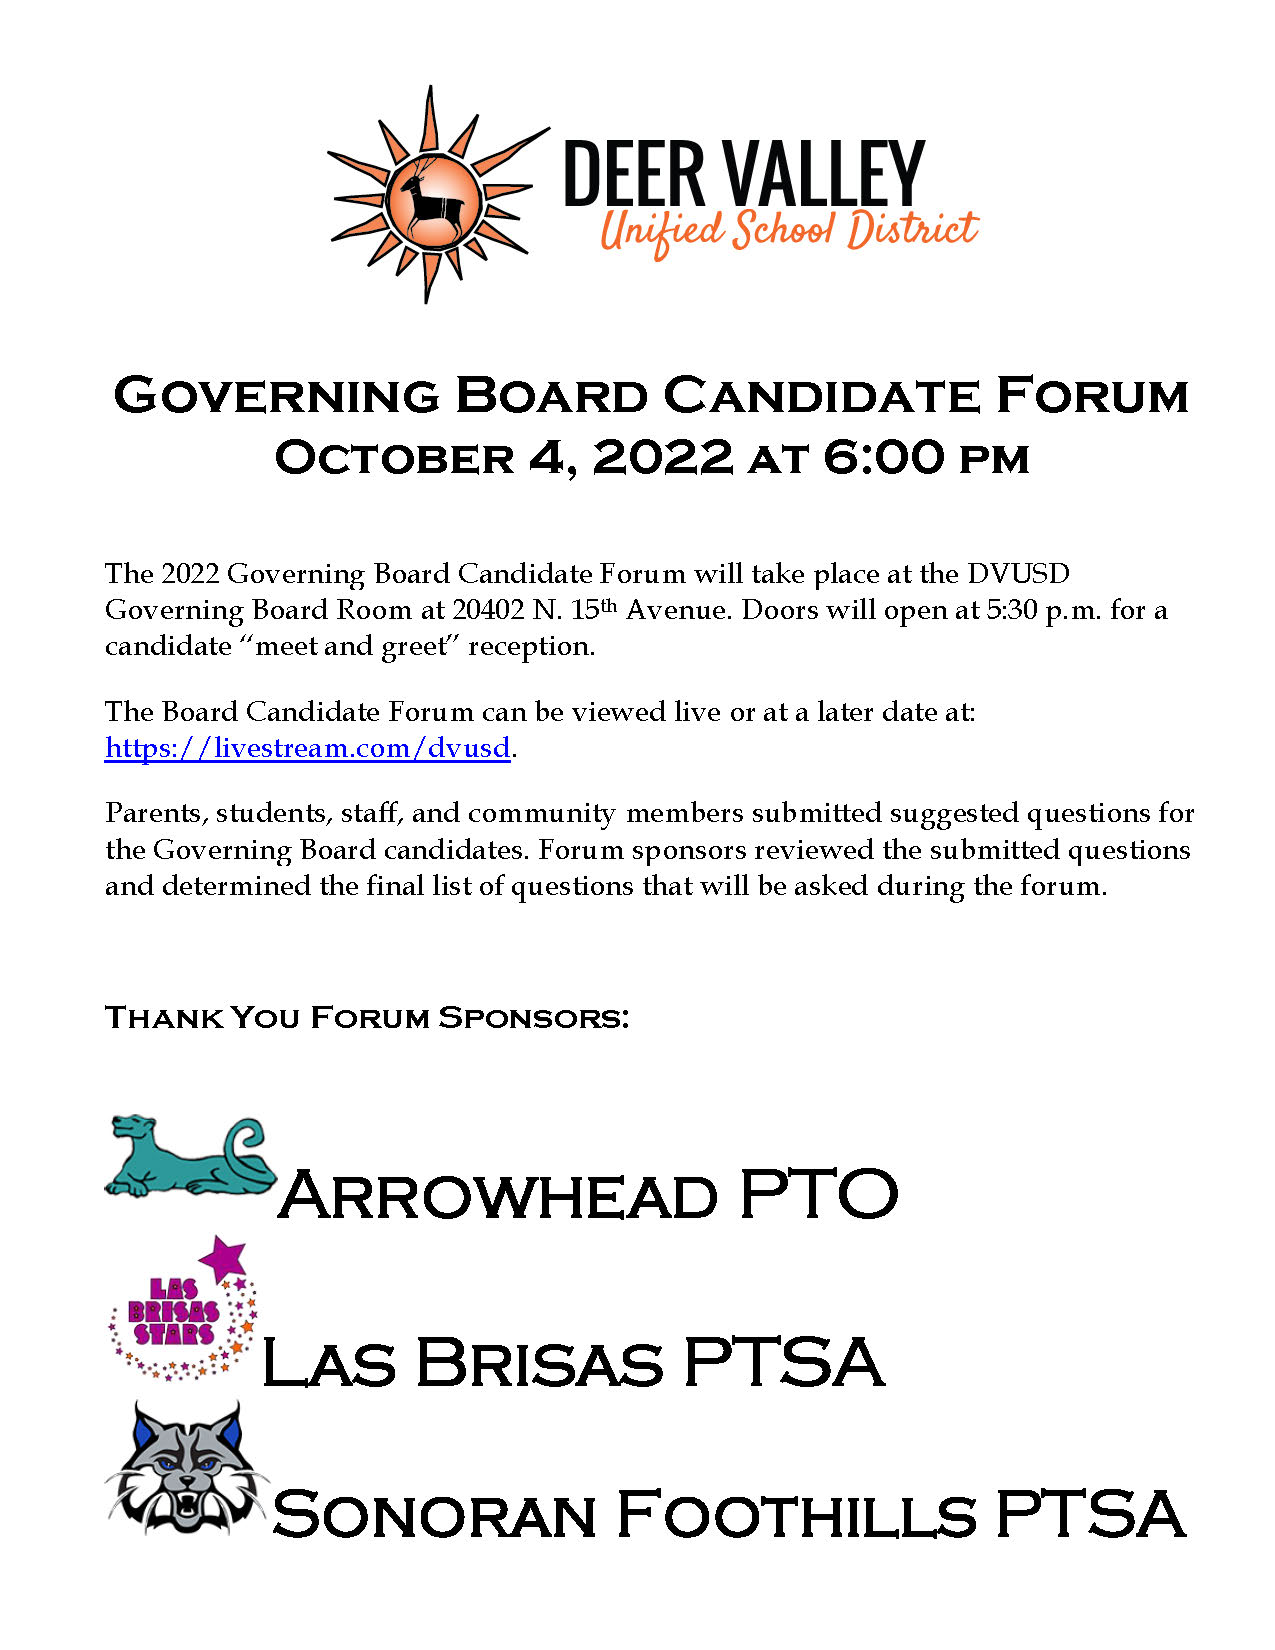 FLYER_DVUSD Governing Board Candidate Forum22.jpg